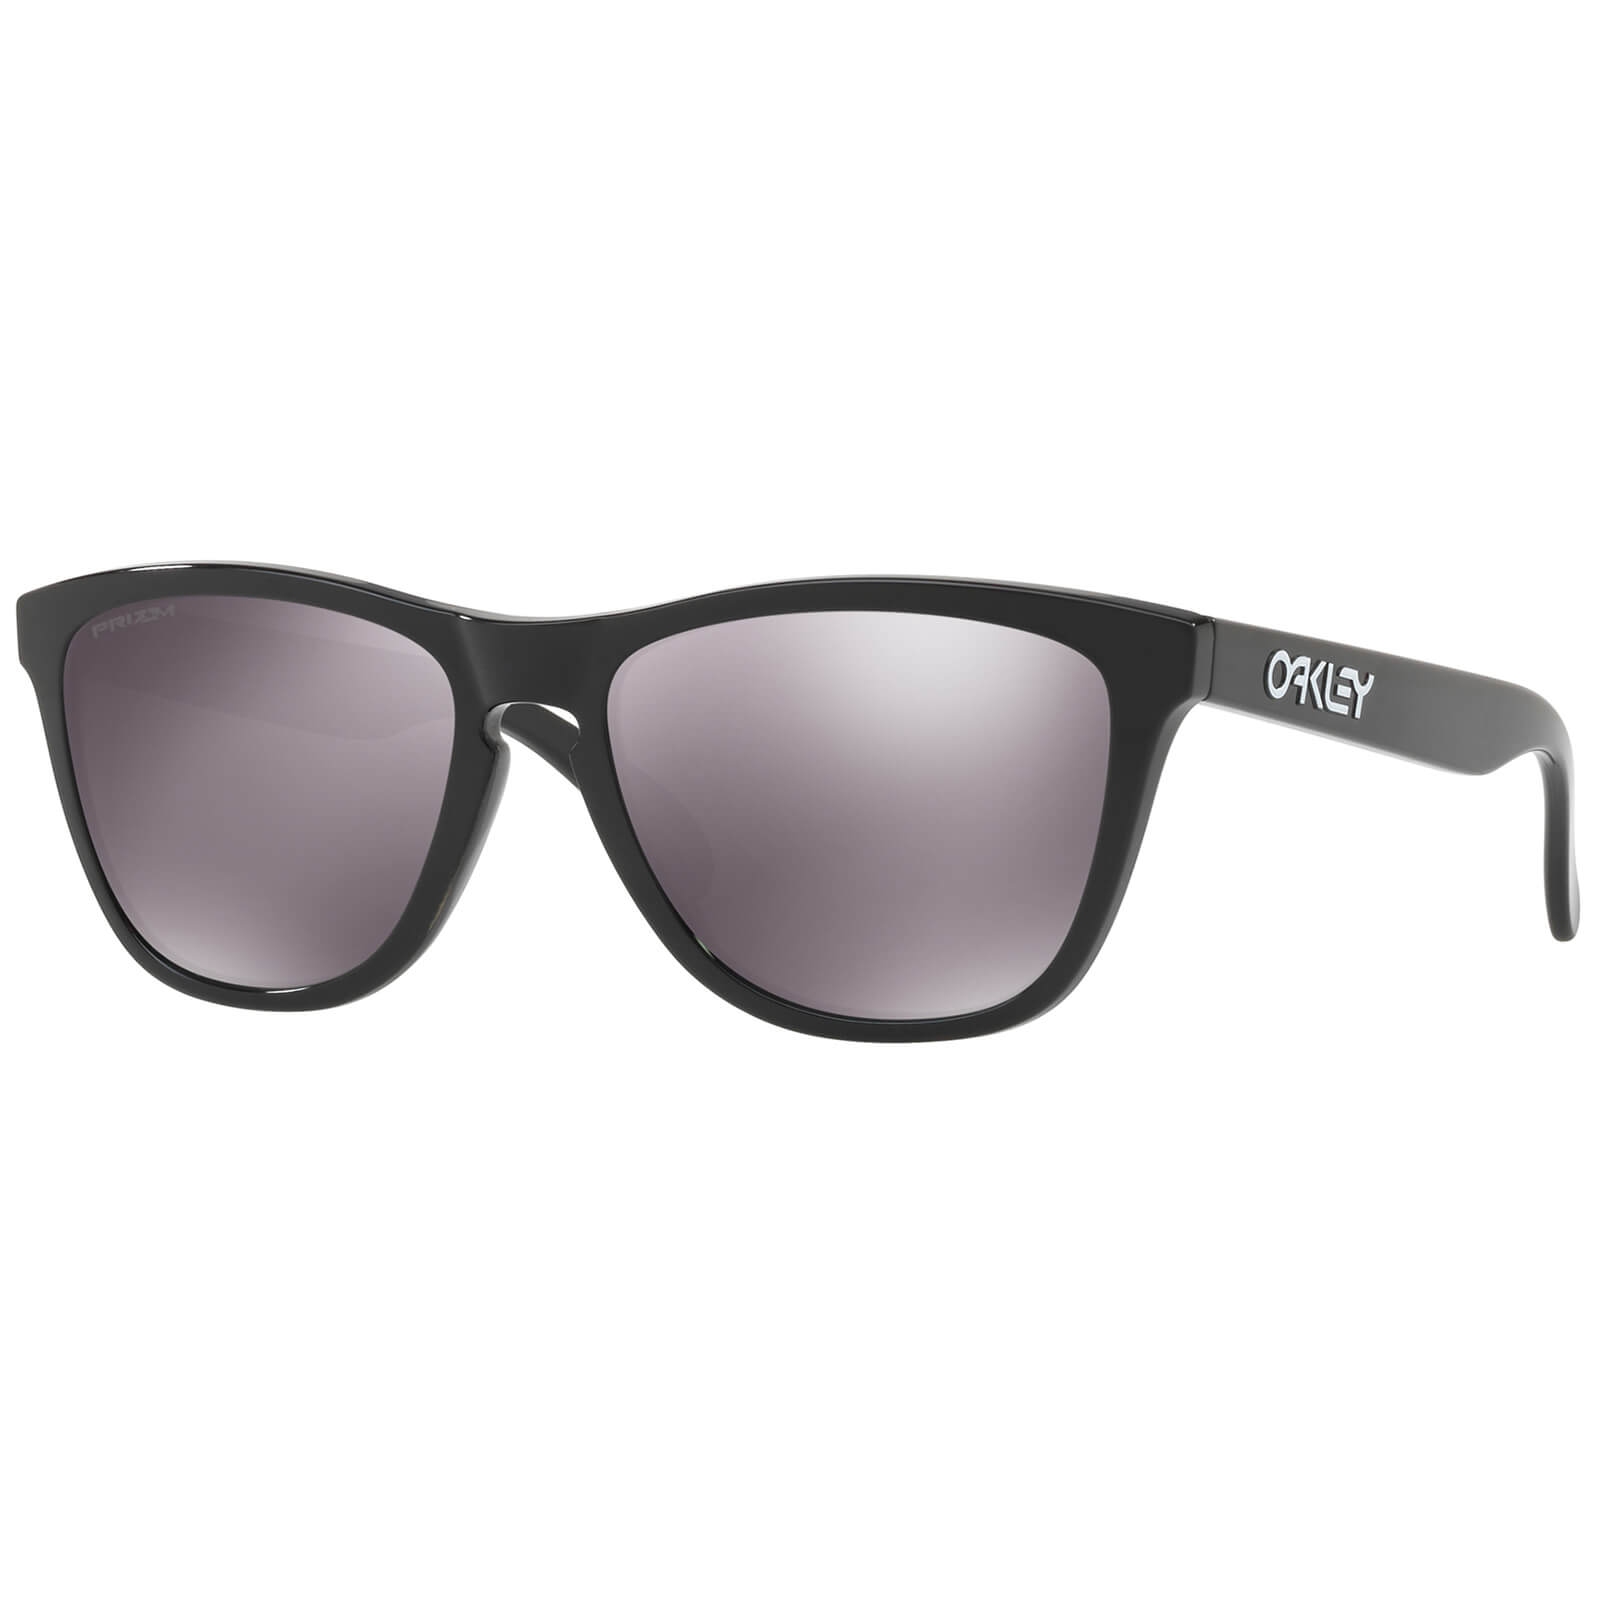 Oakley Frogskins Sunglasses - Prizm Black